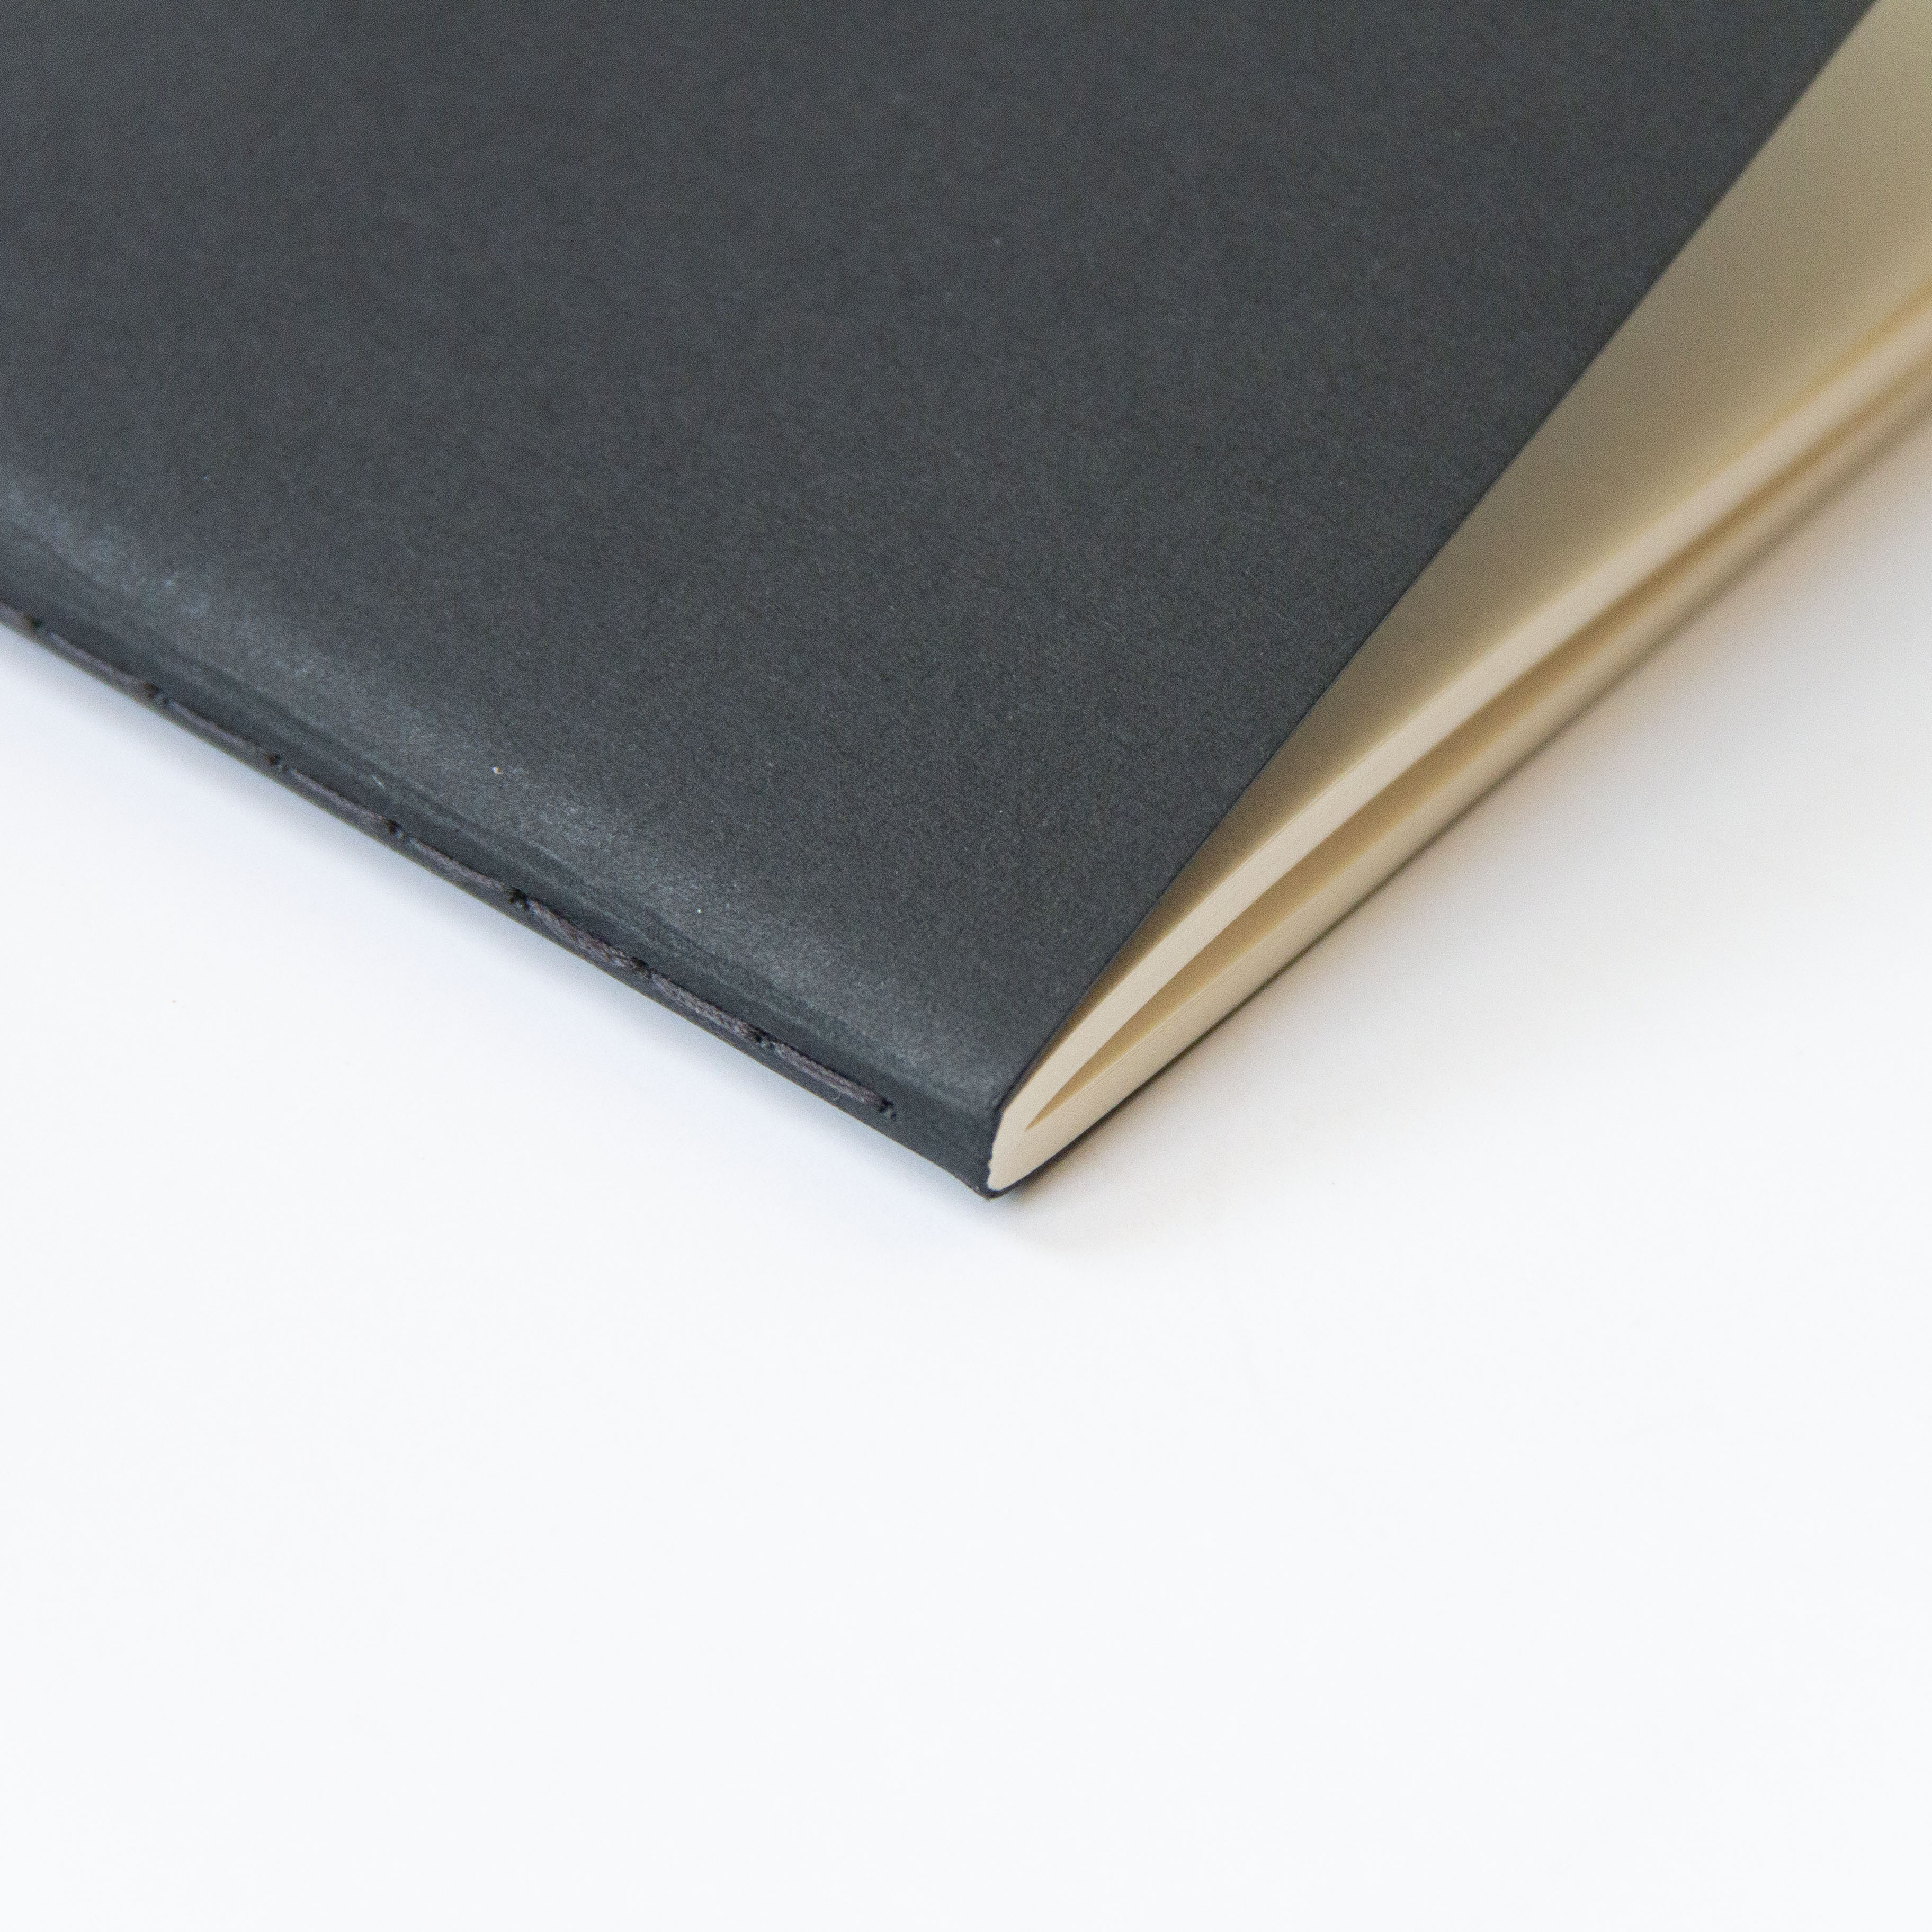 OCTÀGON DESIGN | &quot;Awkward ideas&quot; notebook details. Binding with black thread.